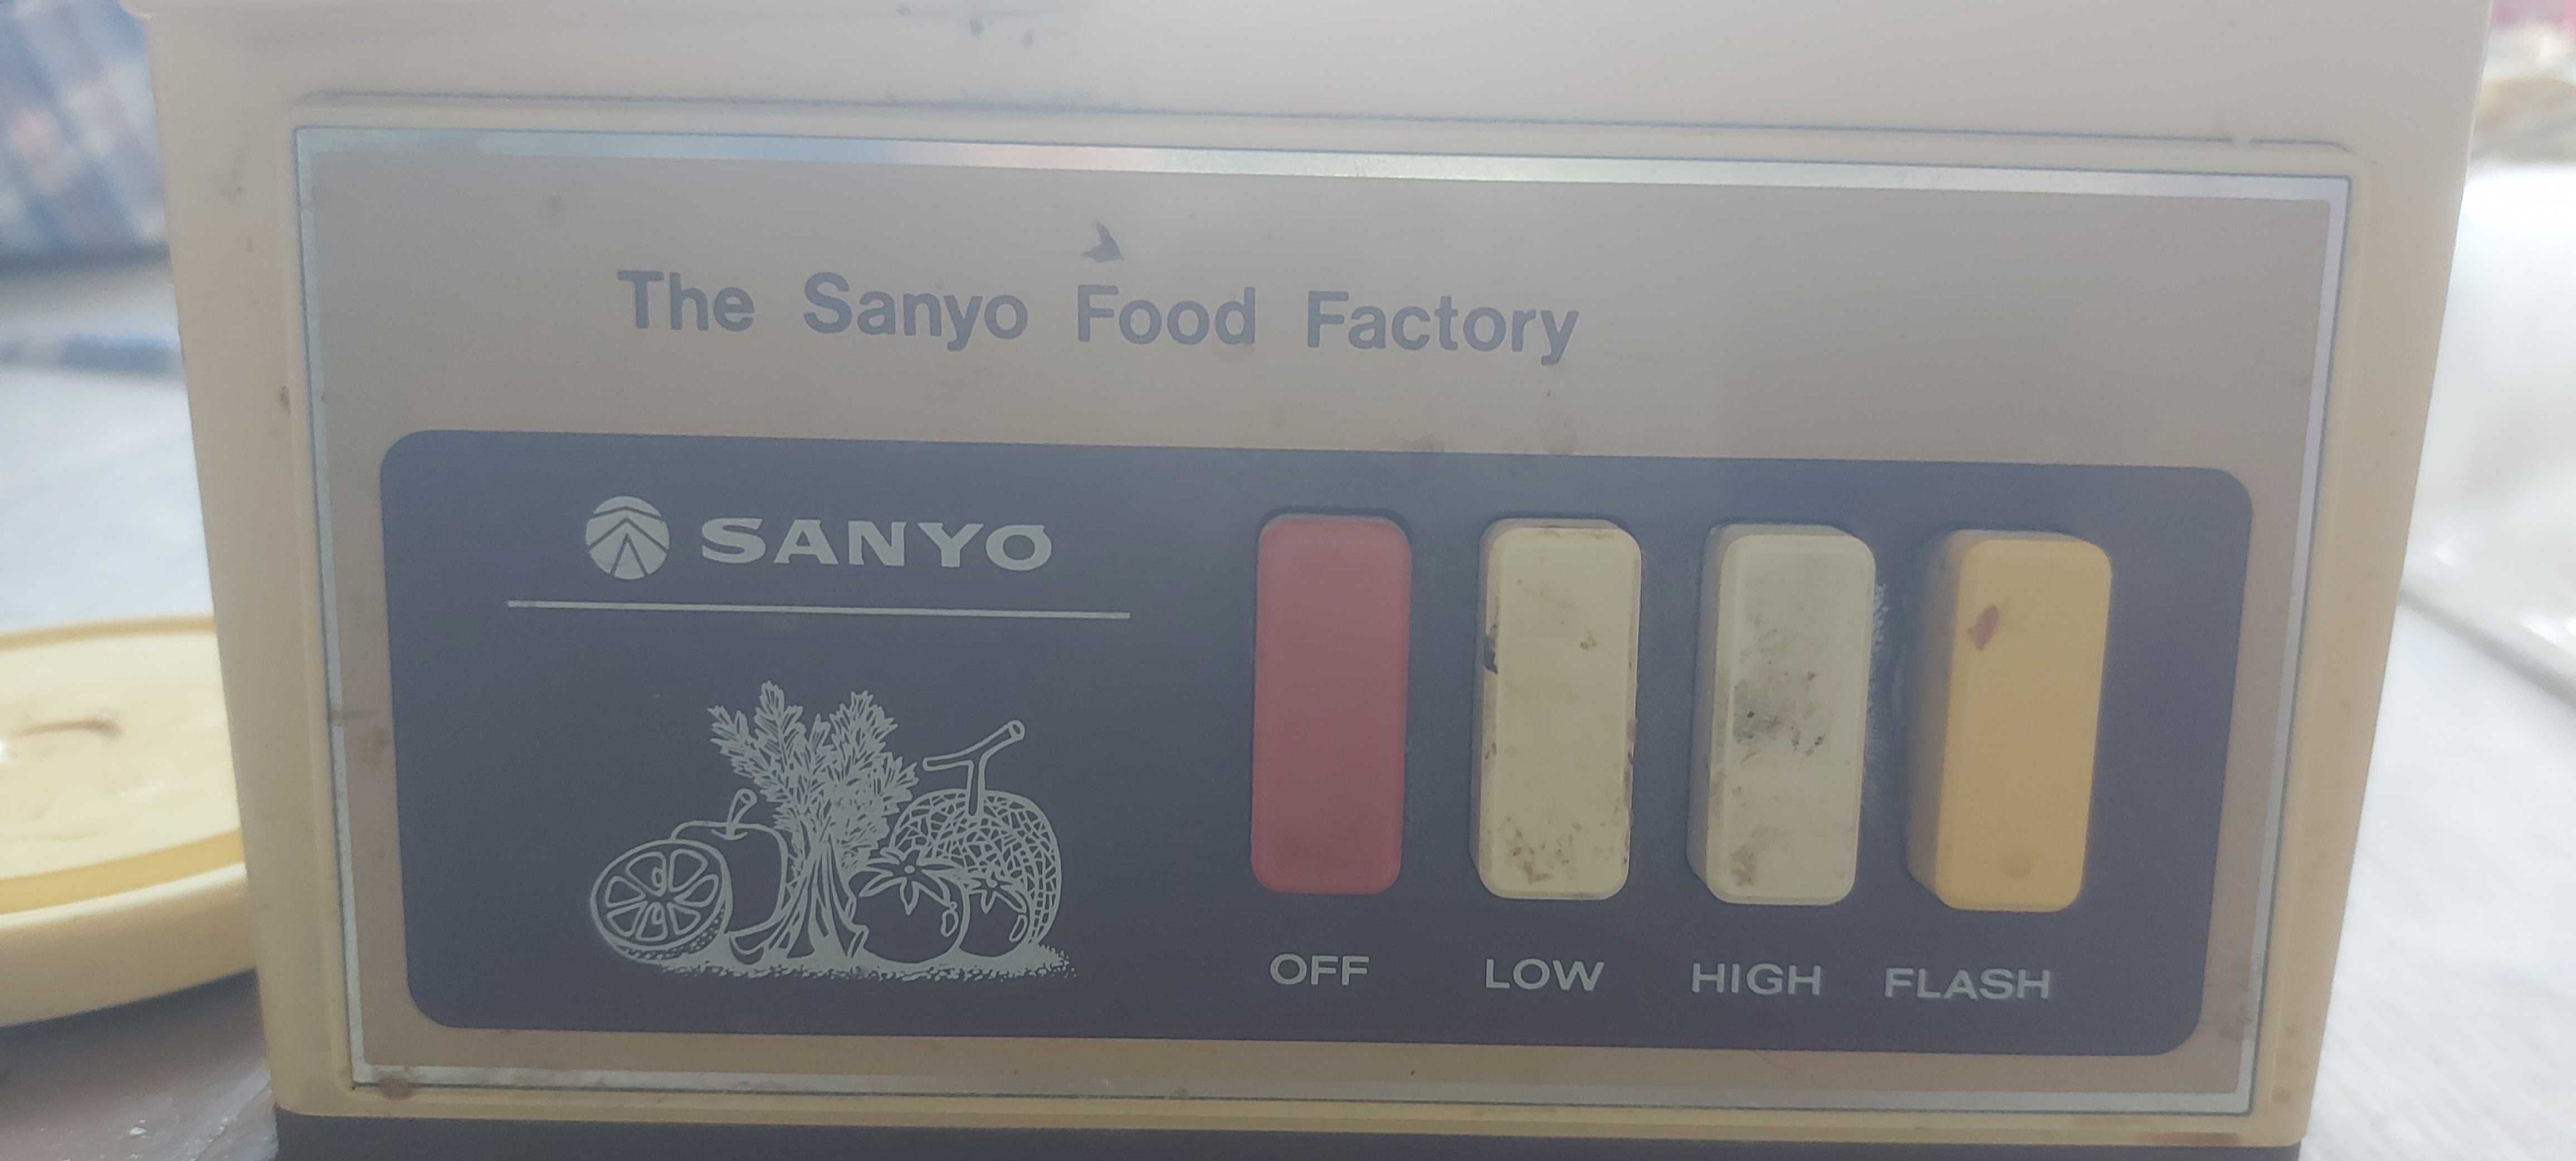 Мотор от кухонного комбайна "SANYO"